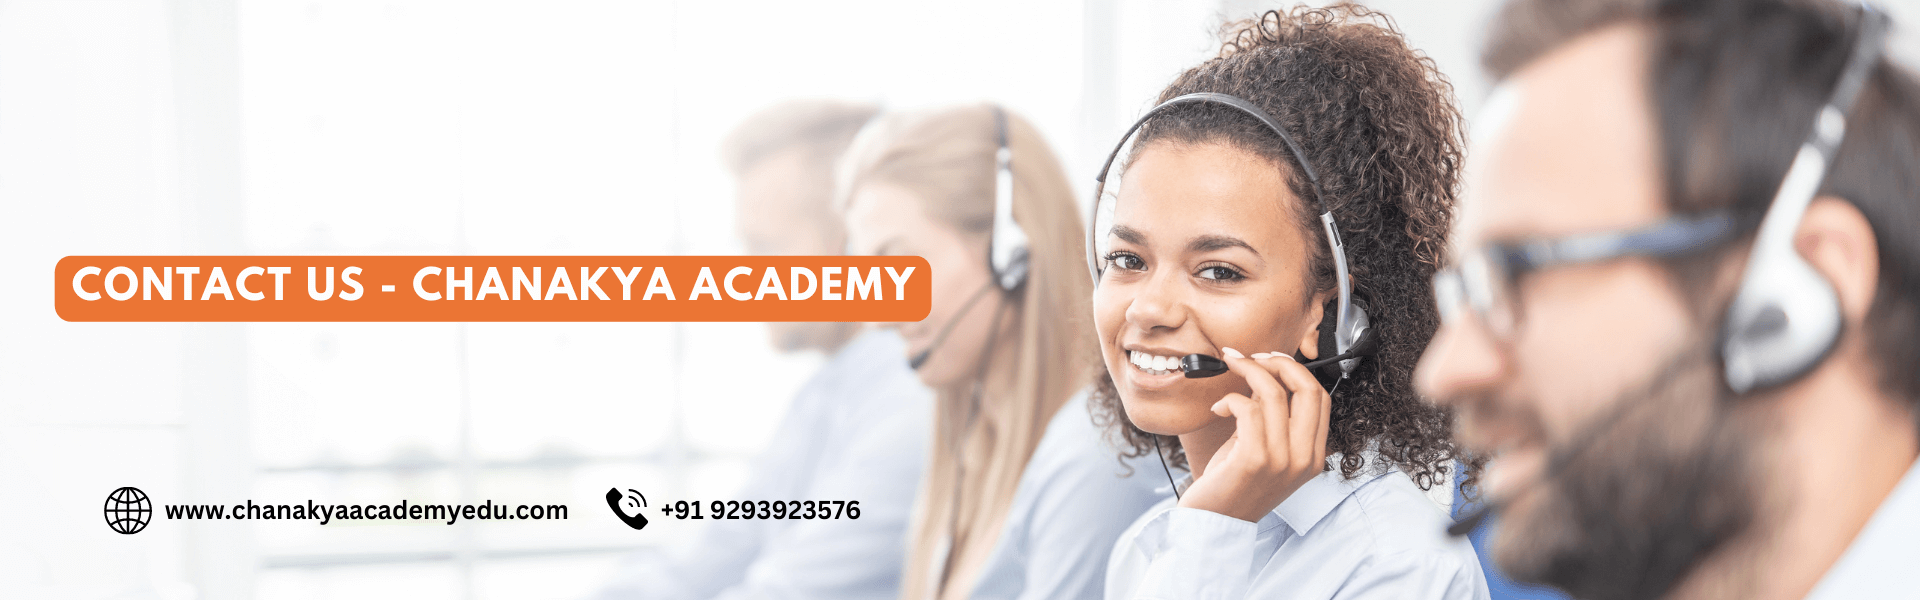 Contact Us - Chanakya Academy